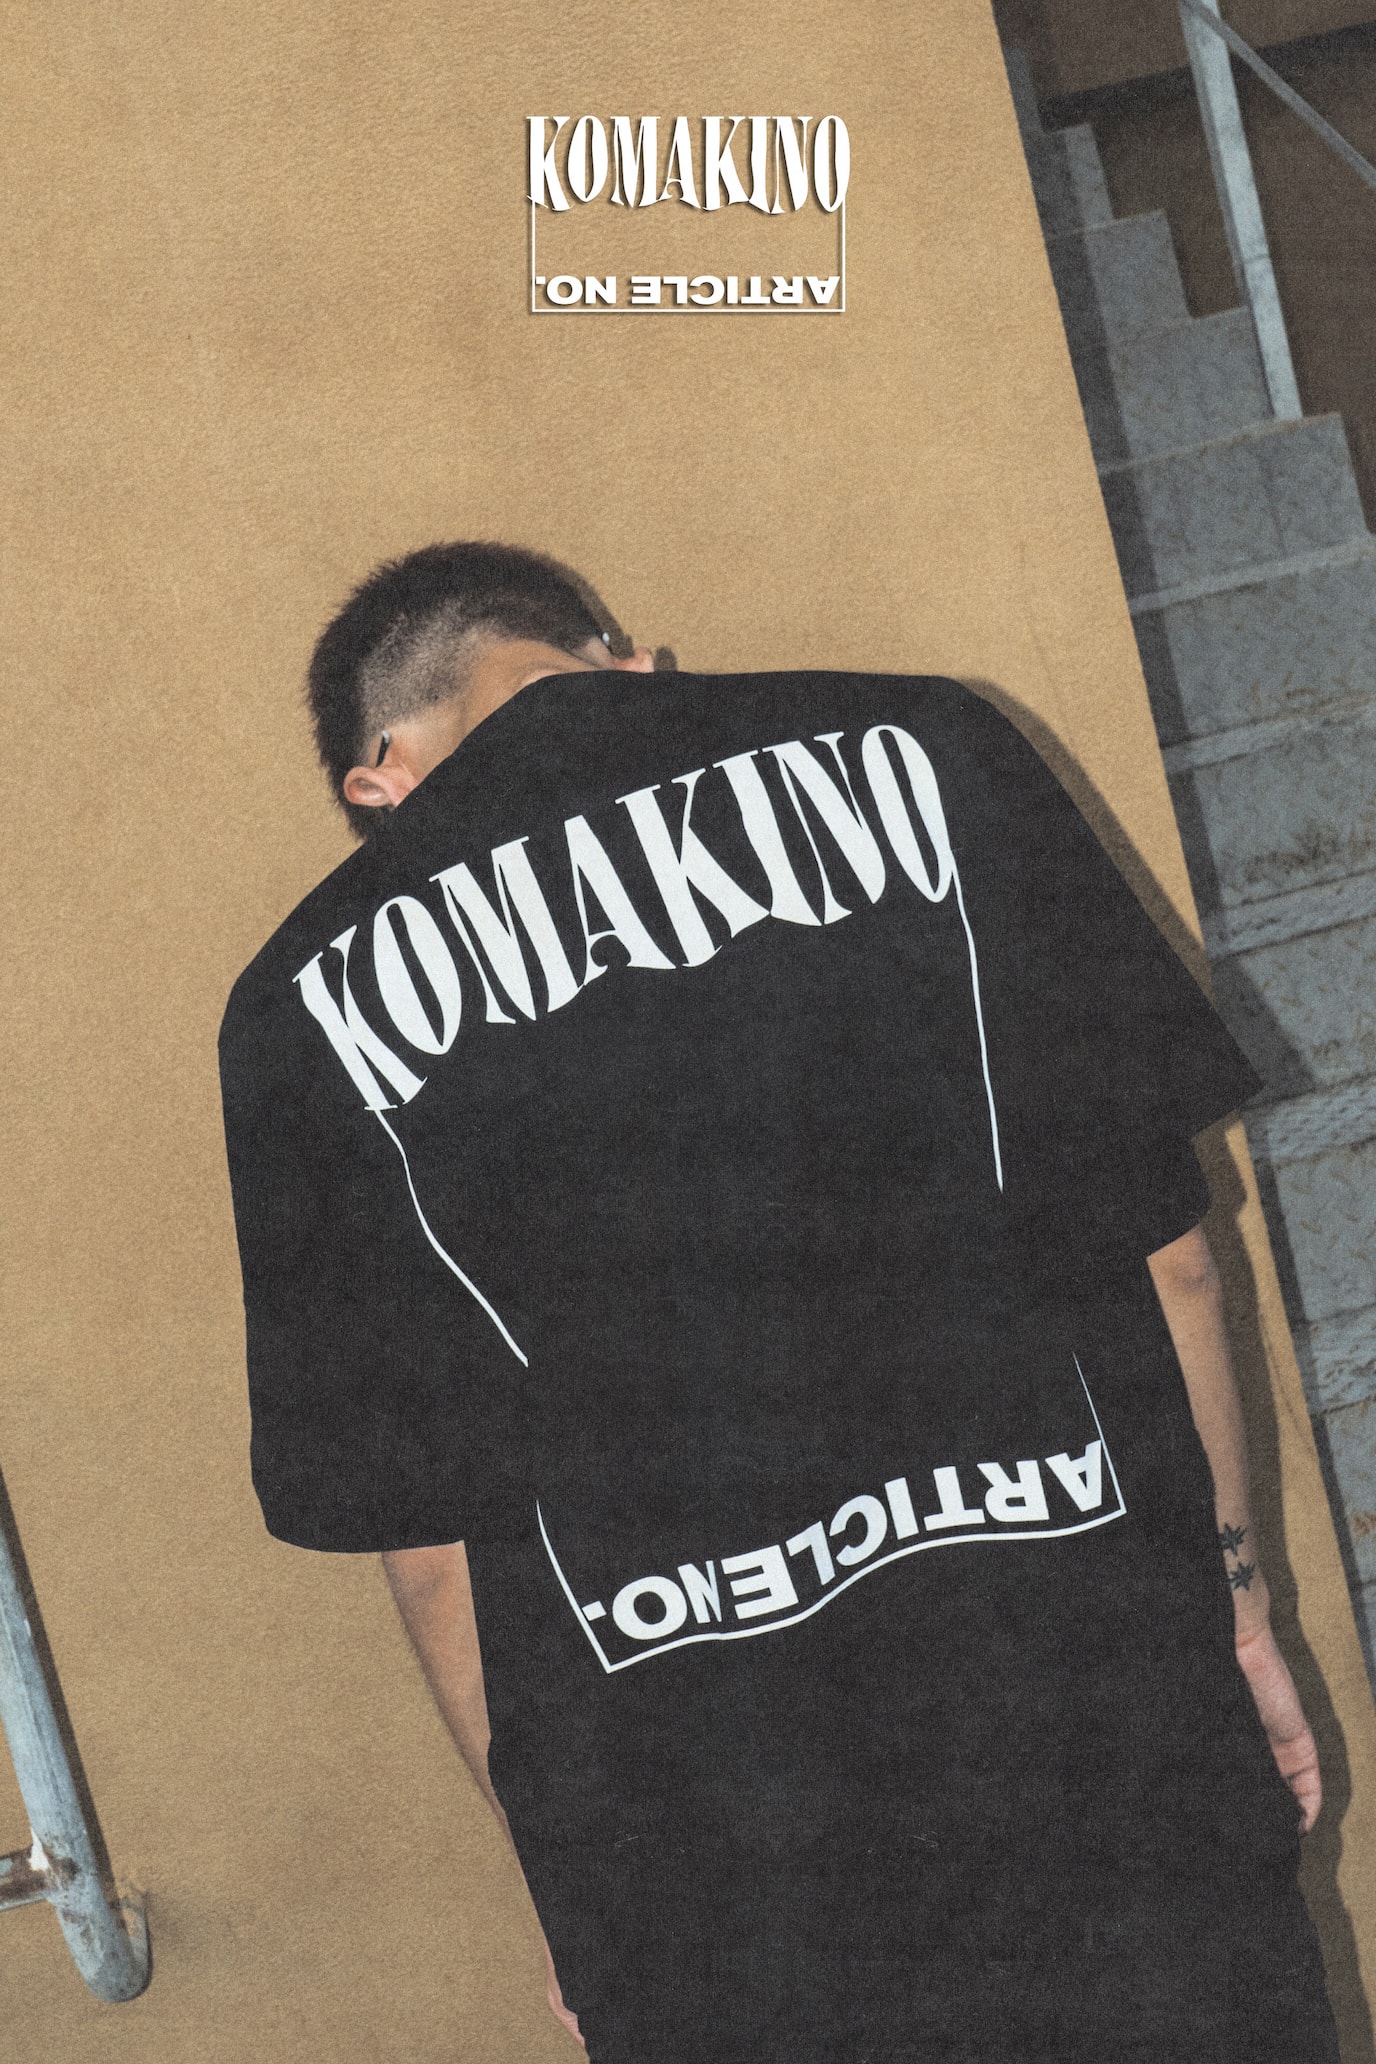 ARTICLE NO. 联手伦敦男装品牌 KOMAKINO 打造全新联名系列